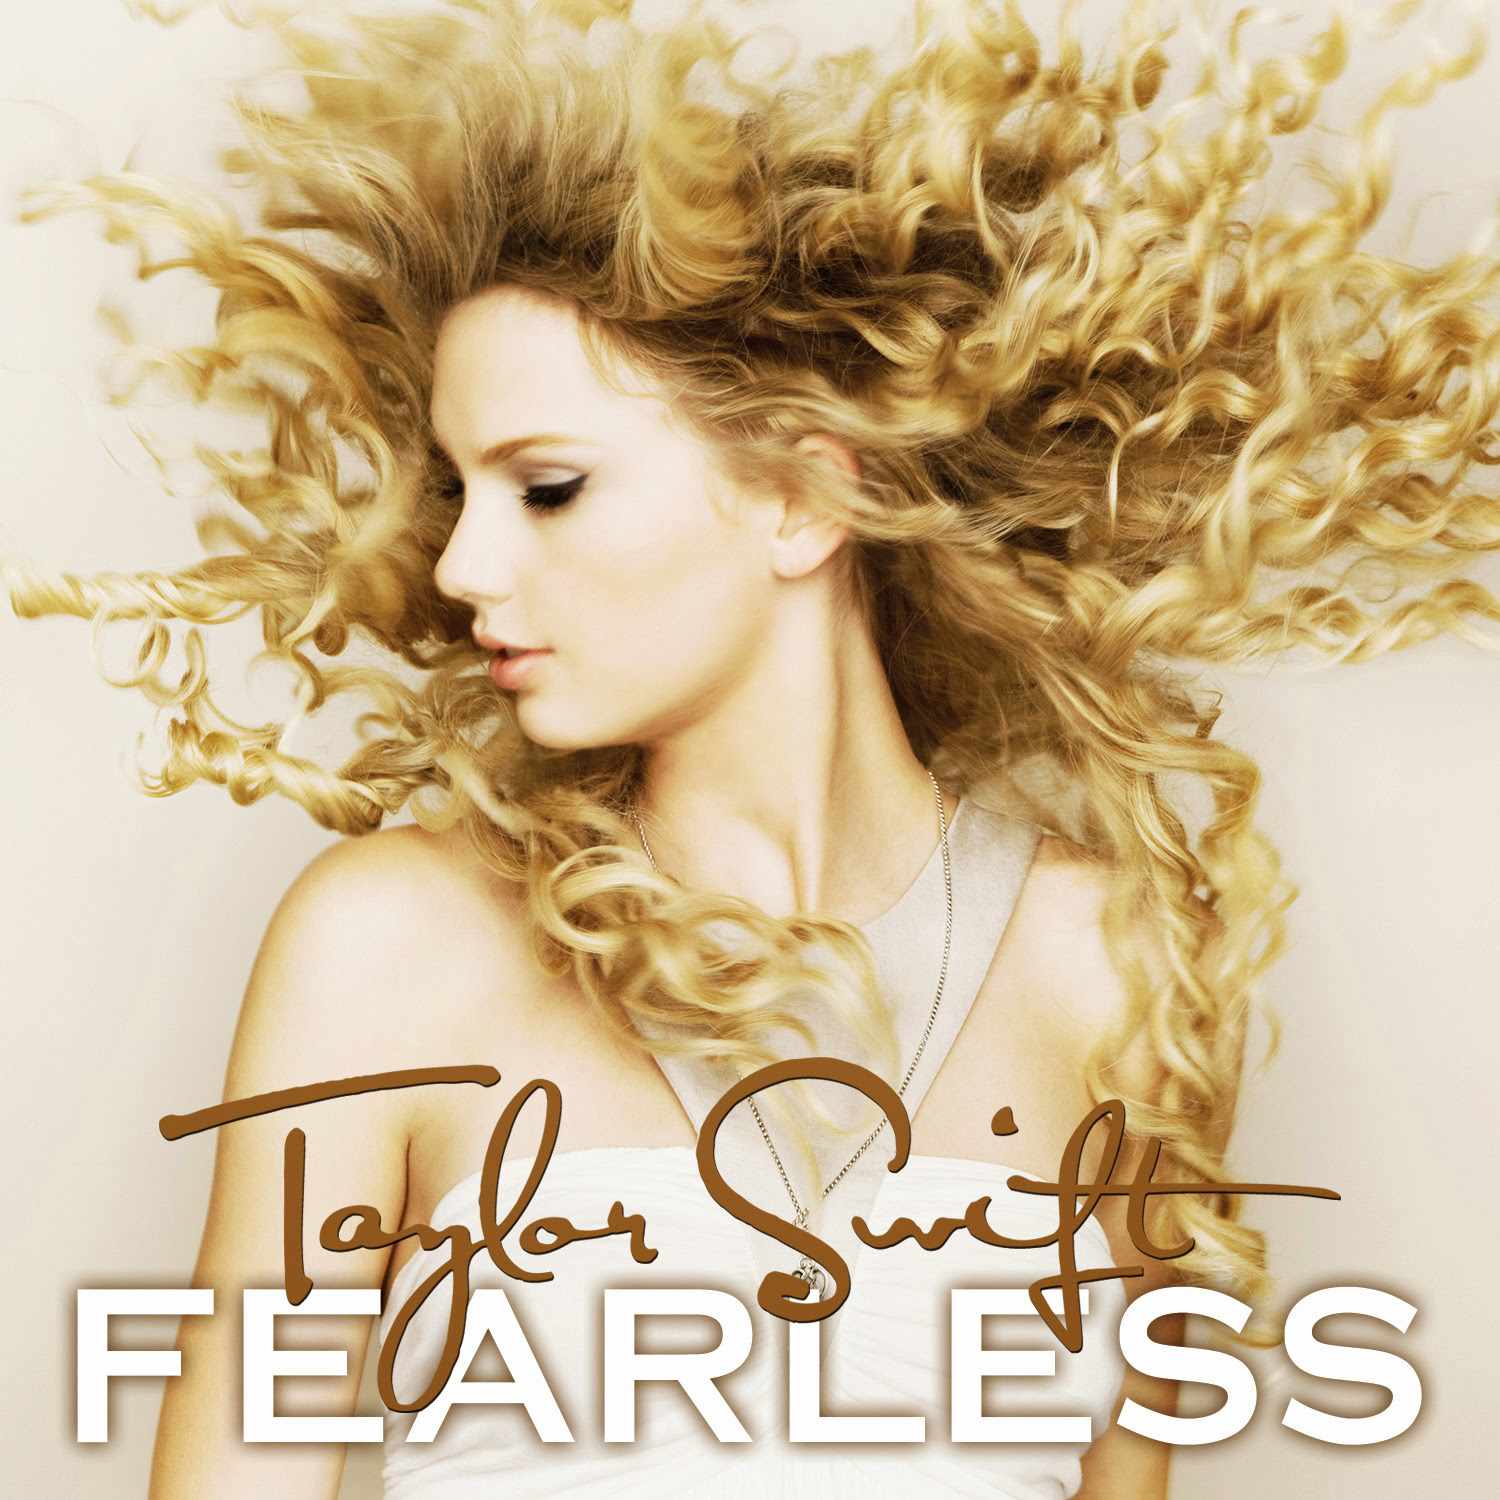 Fearless Taylor Swift Wiki Fandom Powered By Wikia